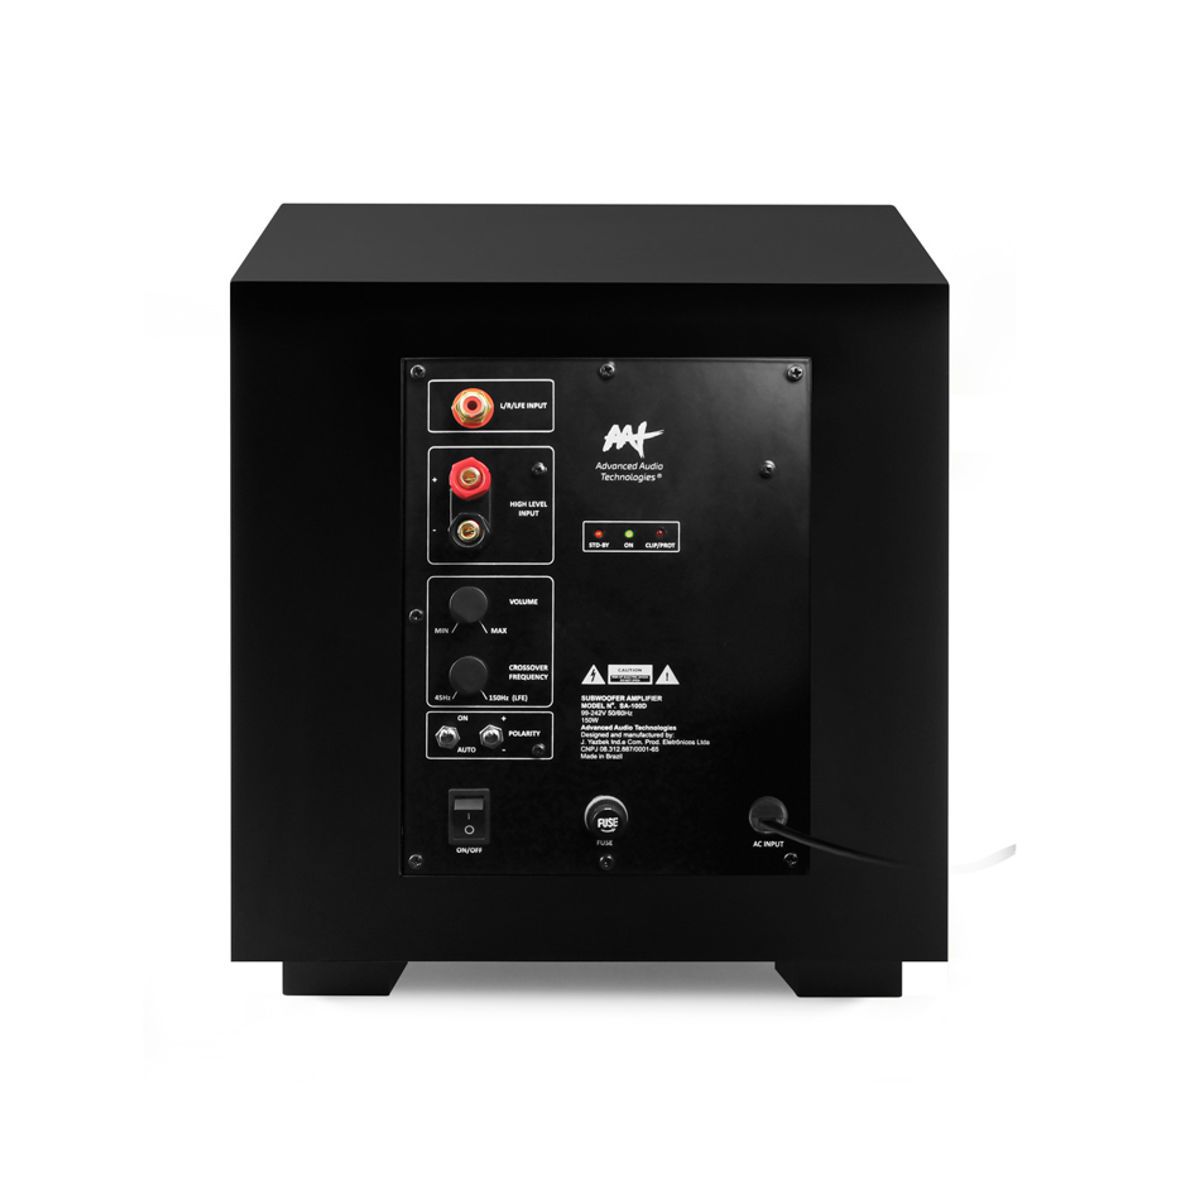 Kit 5.1.2 Dolby Atmos Caixa Acústica de Embutir LCR-A100 + LR-E100 + NQ6-M100 + Subwoofer Compact Cube 8 AAT